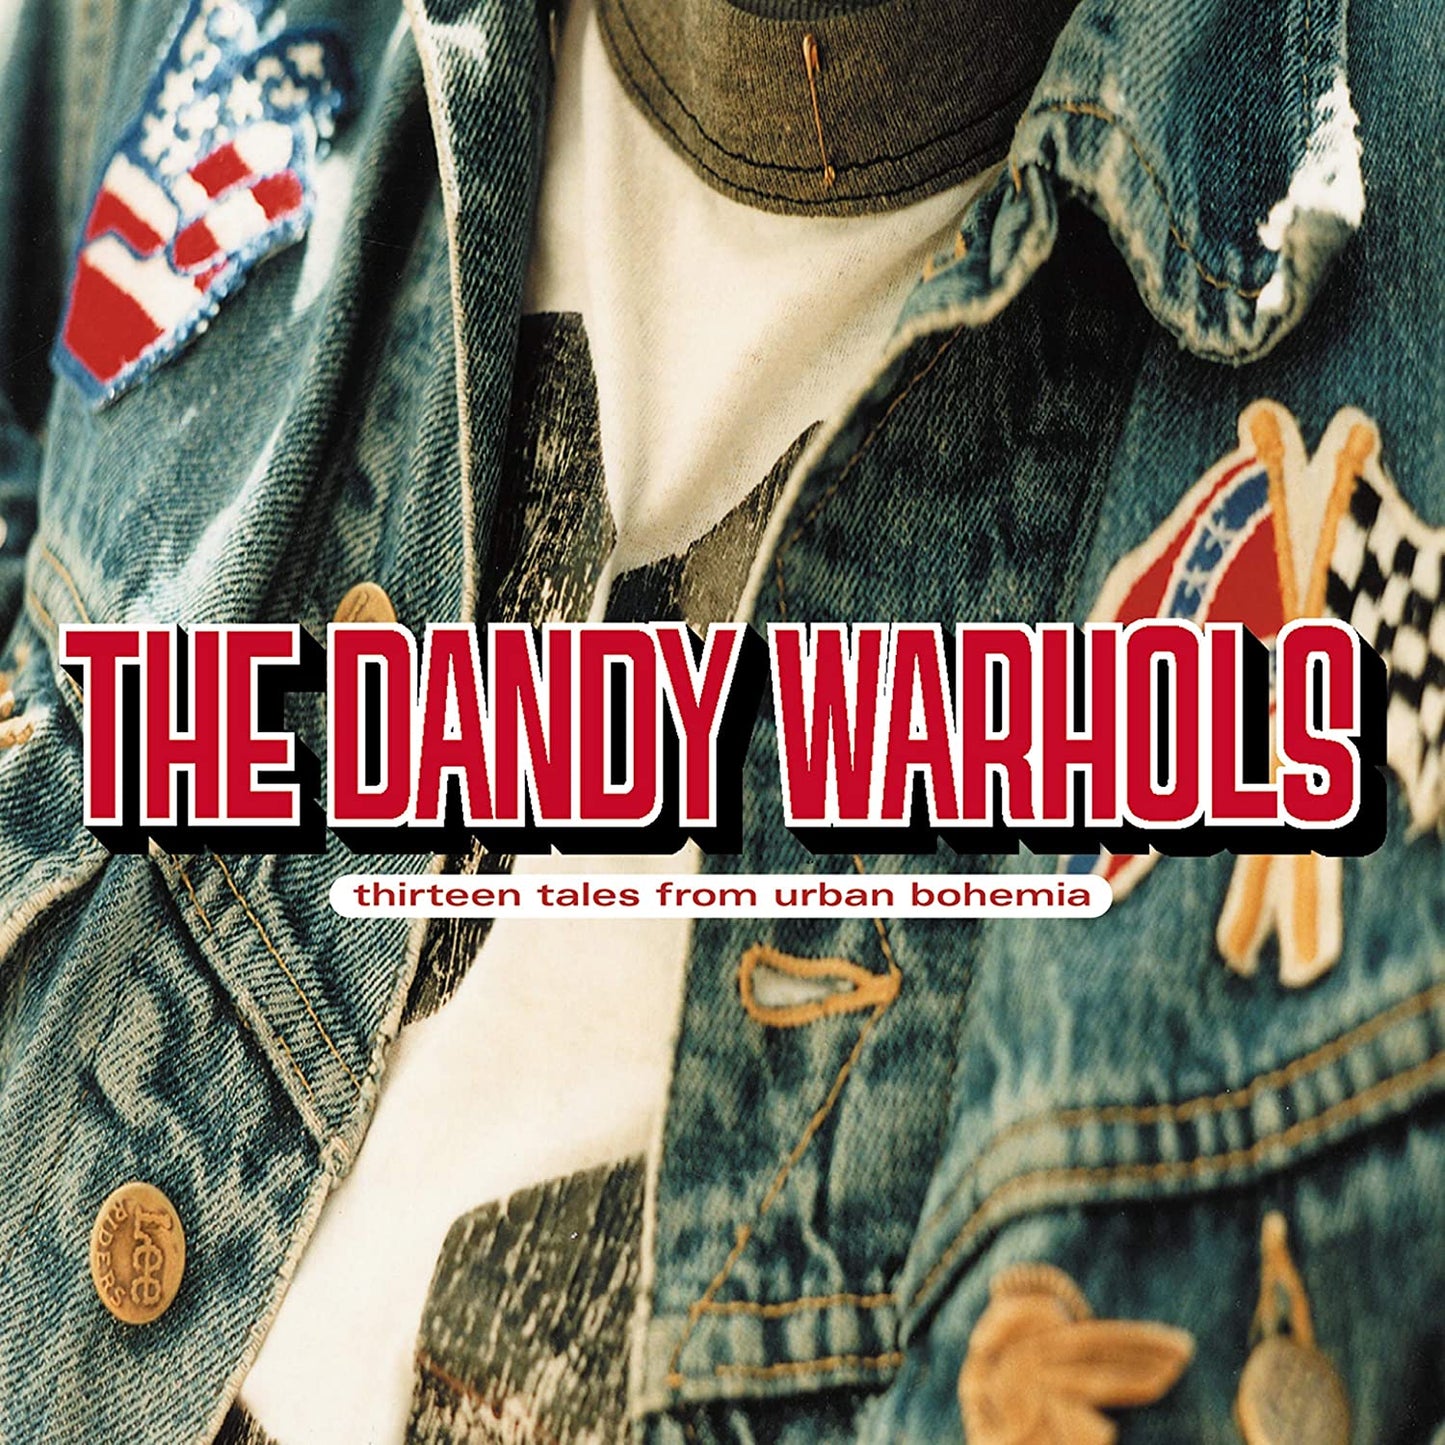 The Dandy Warhols - Thirteen Tales From Urban Bohehemia - USED 2CD